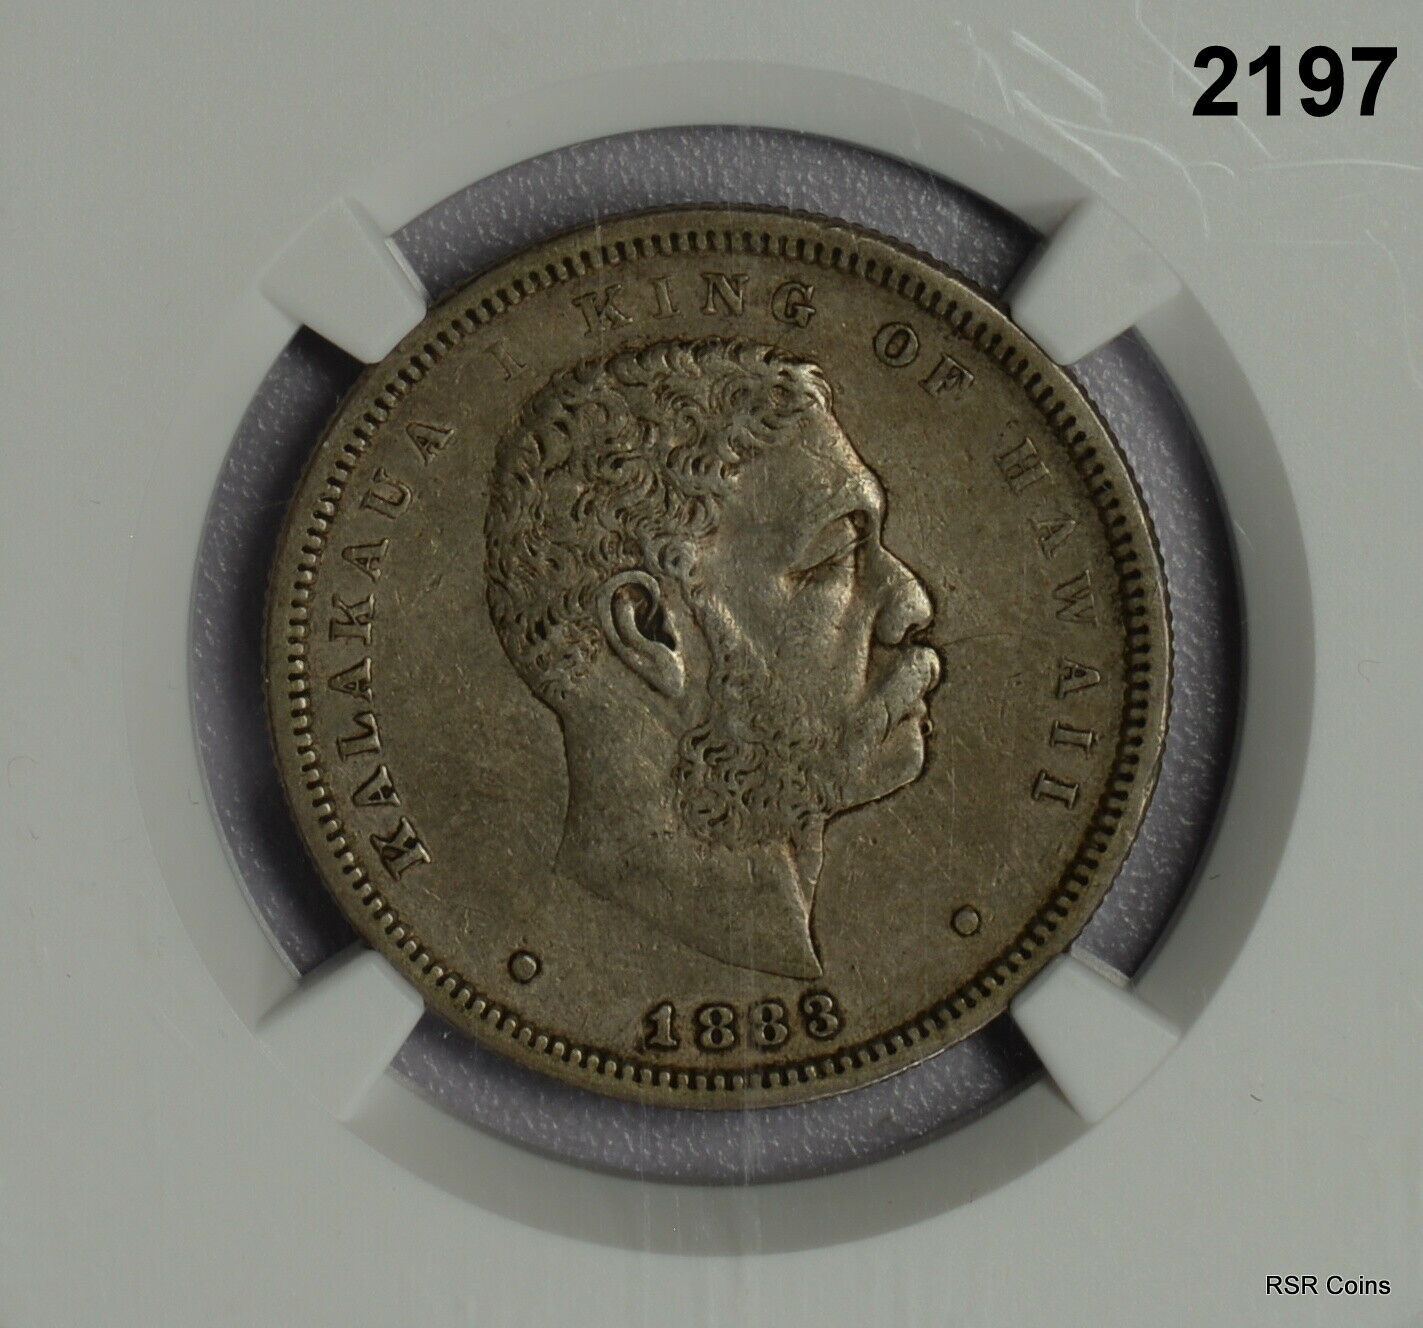 1883 HAWAII 50C HALF DOLLAR NGC CERTIFIED XF 45 RARE COIN #2197